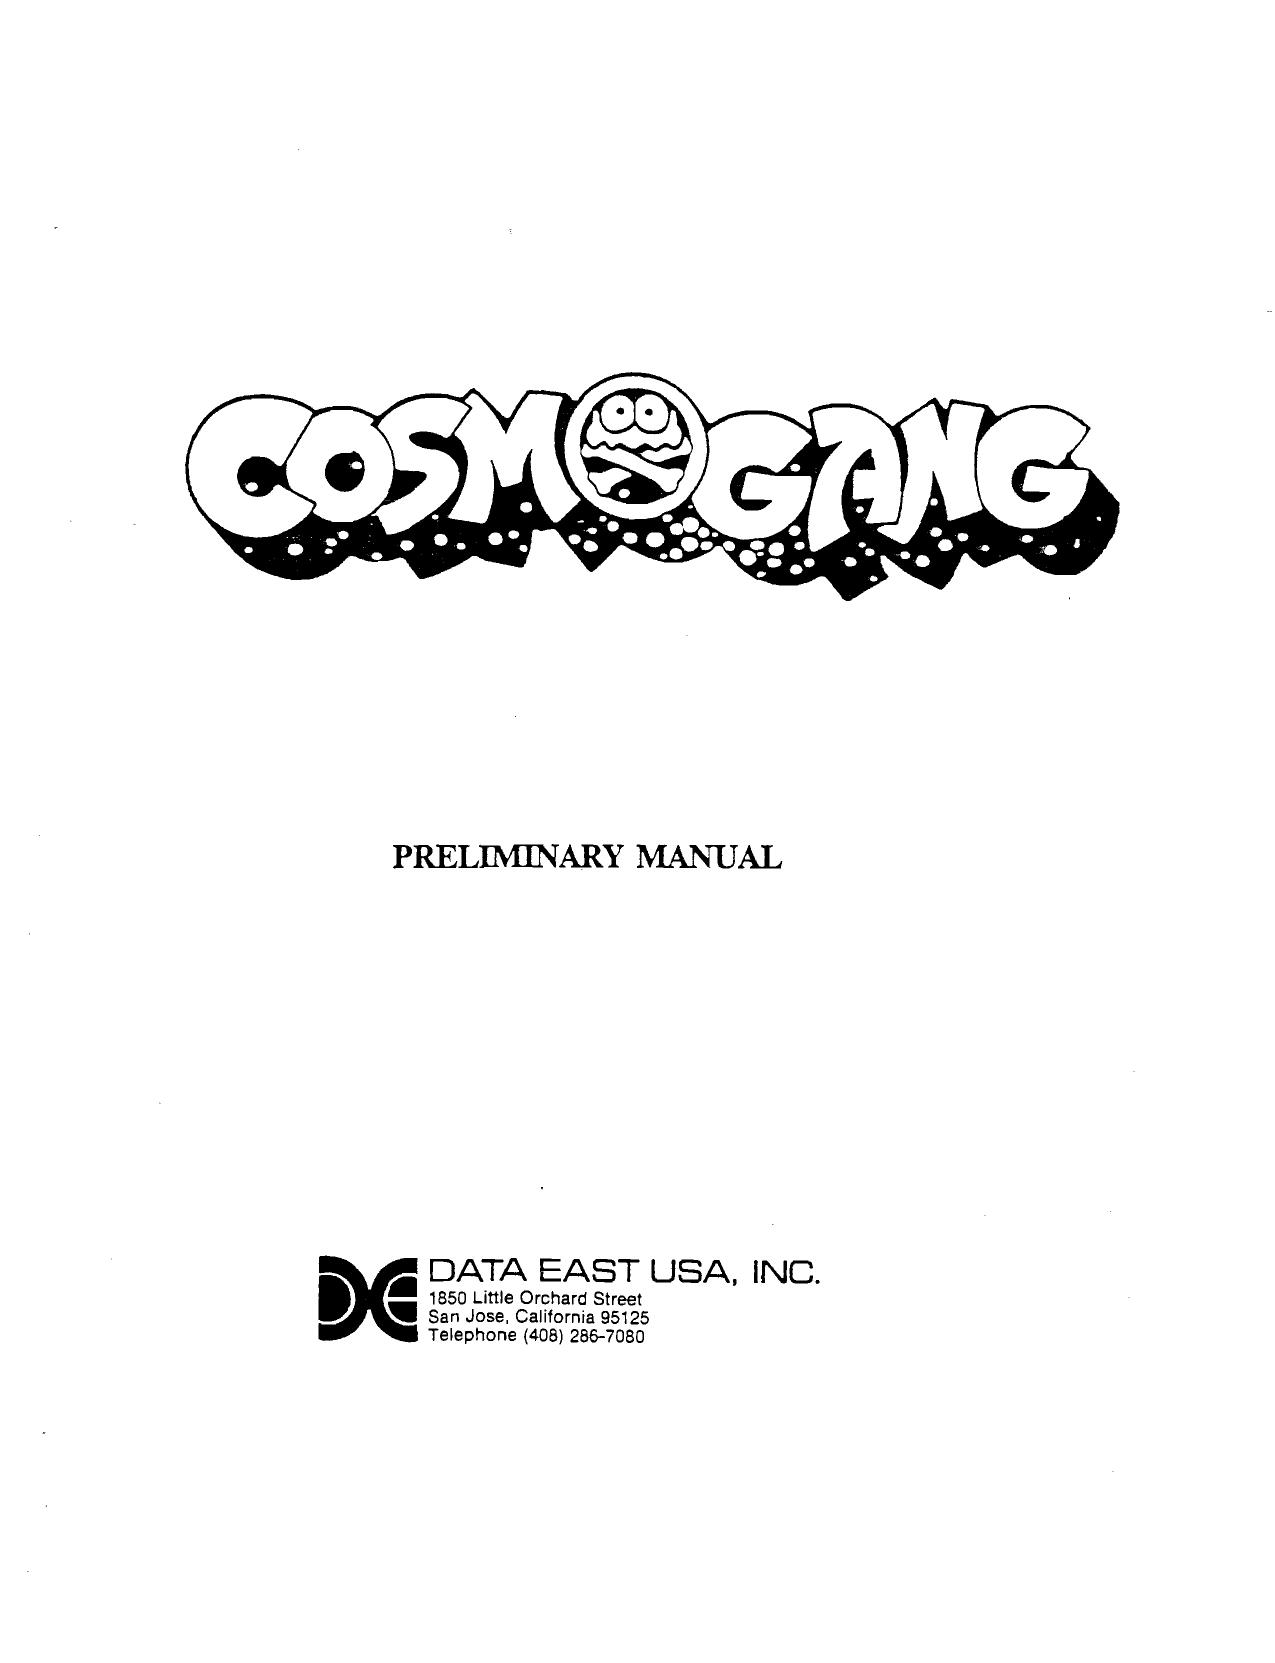 Cosmo Gang Preliminary Manual